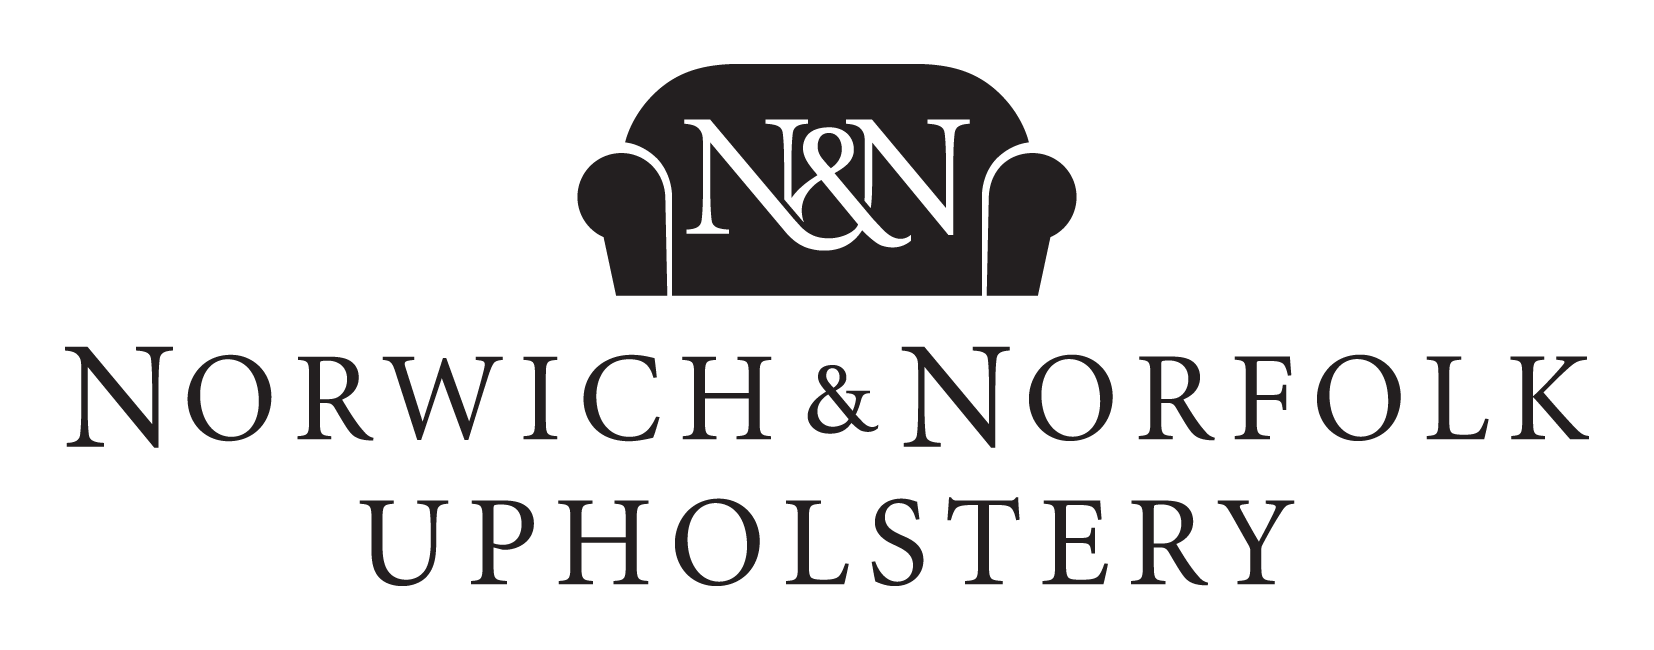 Norwich Norfolk Upholstery